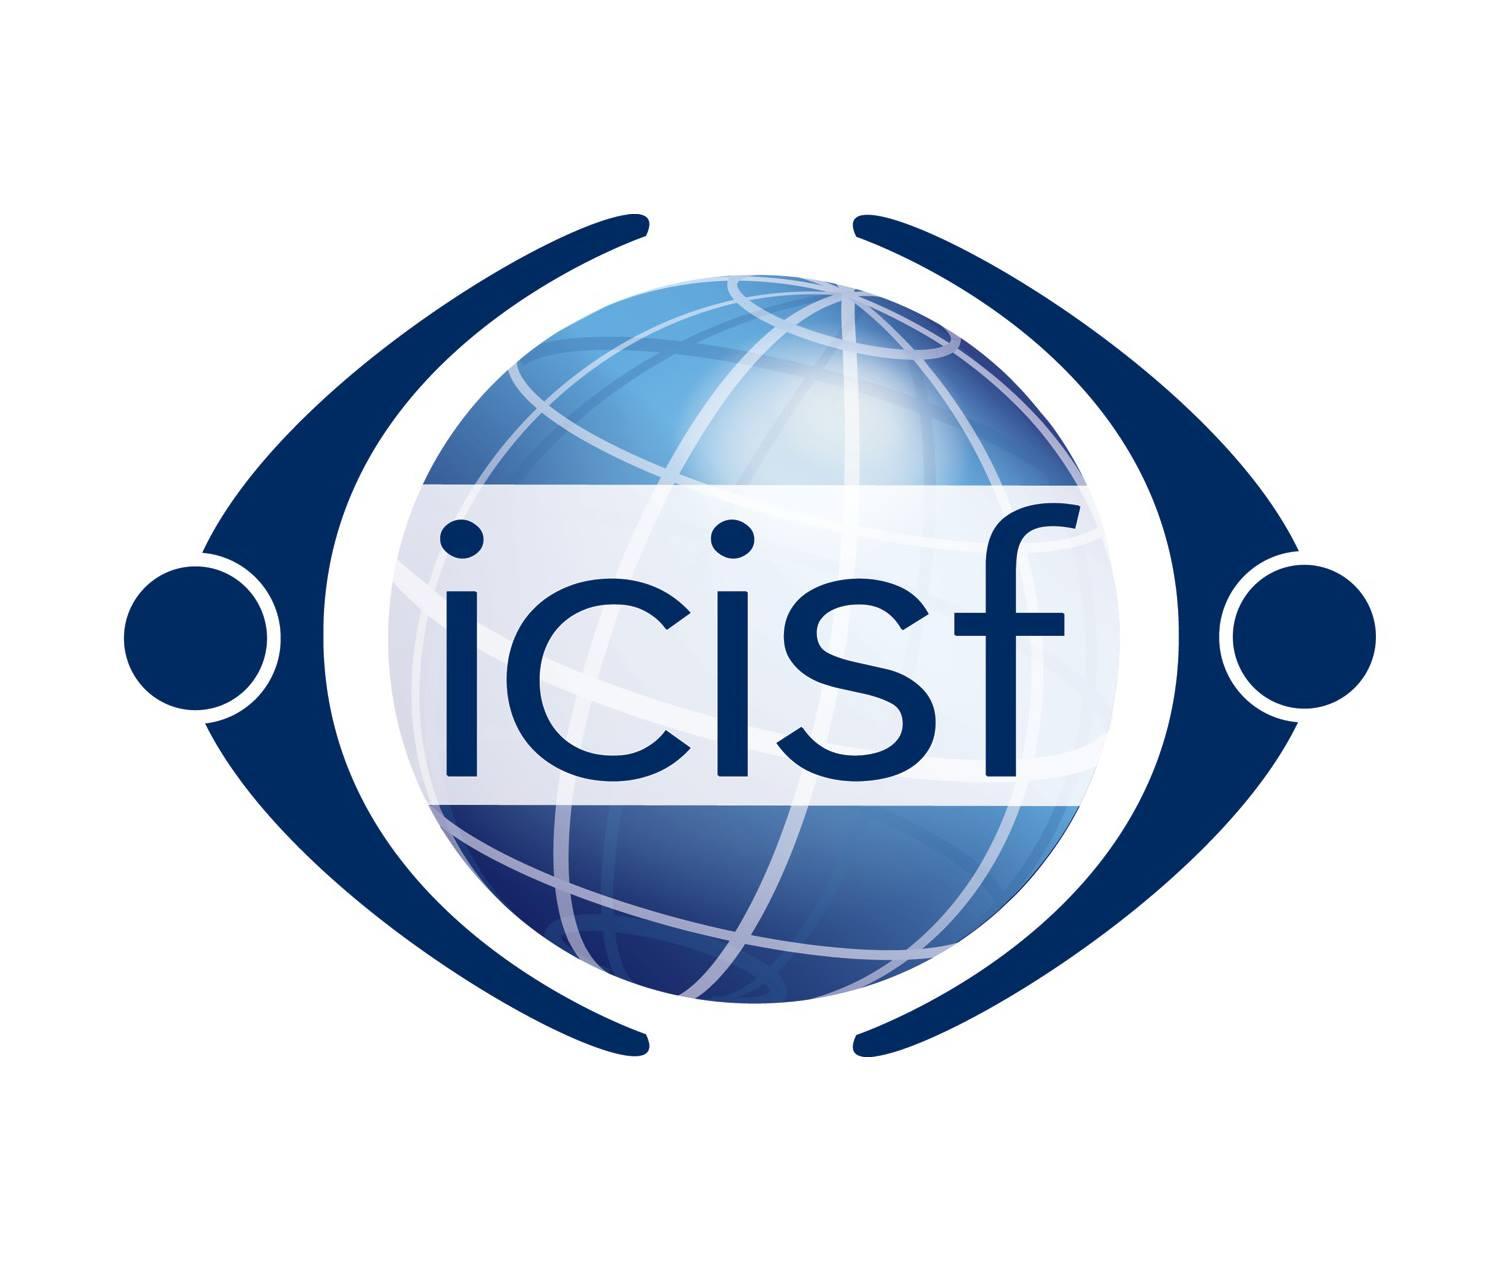 ICISF - ASSISTING INDIVIDUALS IN CRISIS SEMINAR